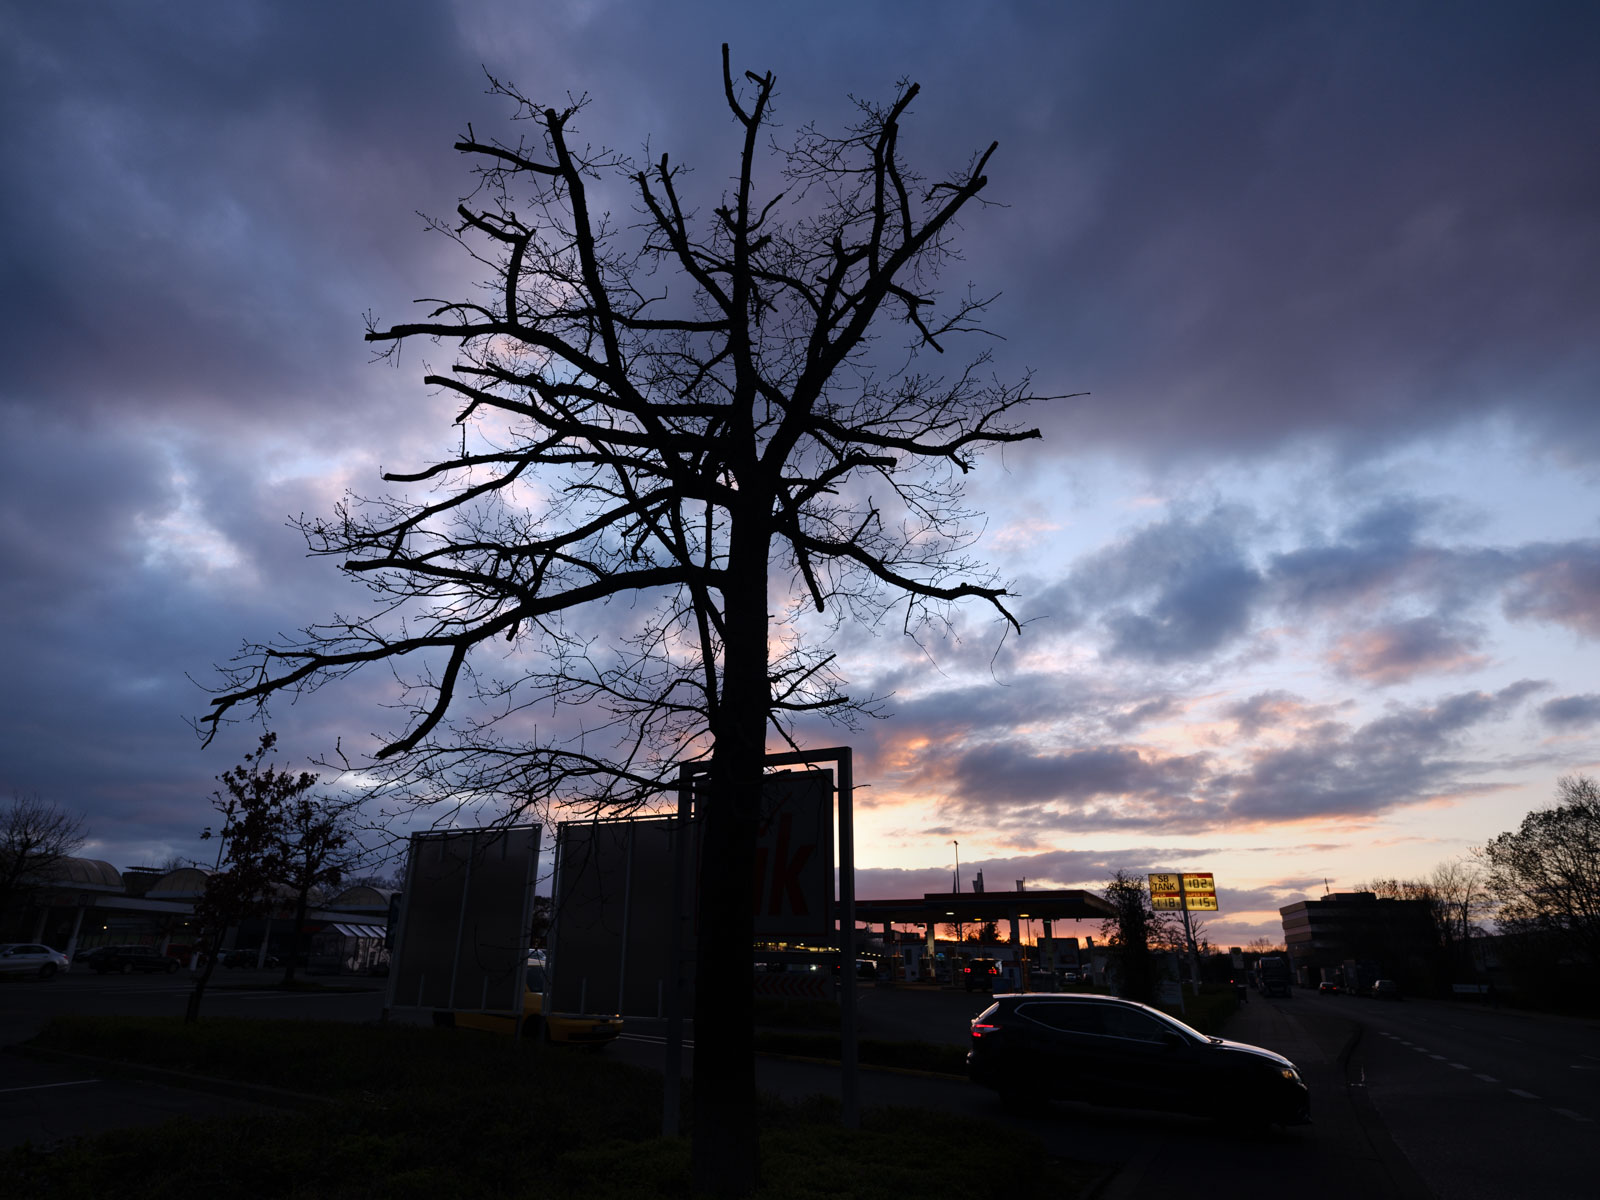 Tree & sky at 'Schweriner Straße' in Bielefeld-Stieghorst (Germany).